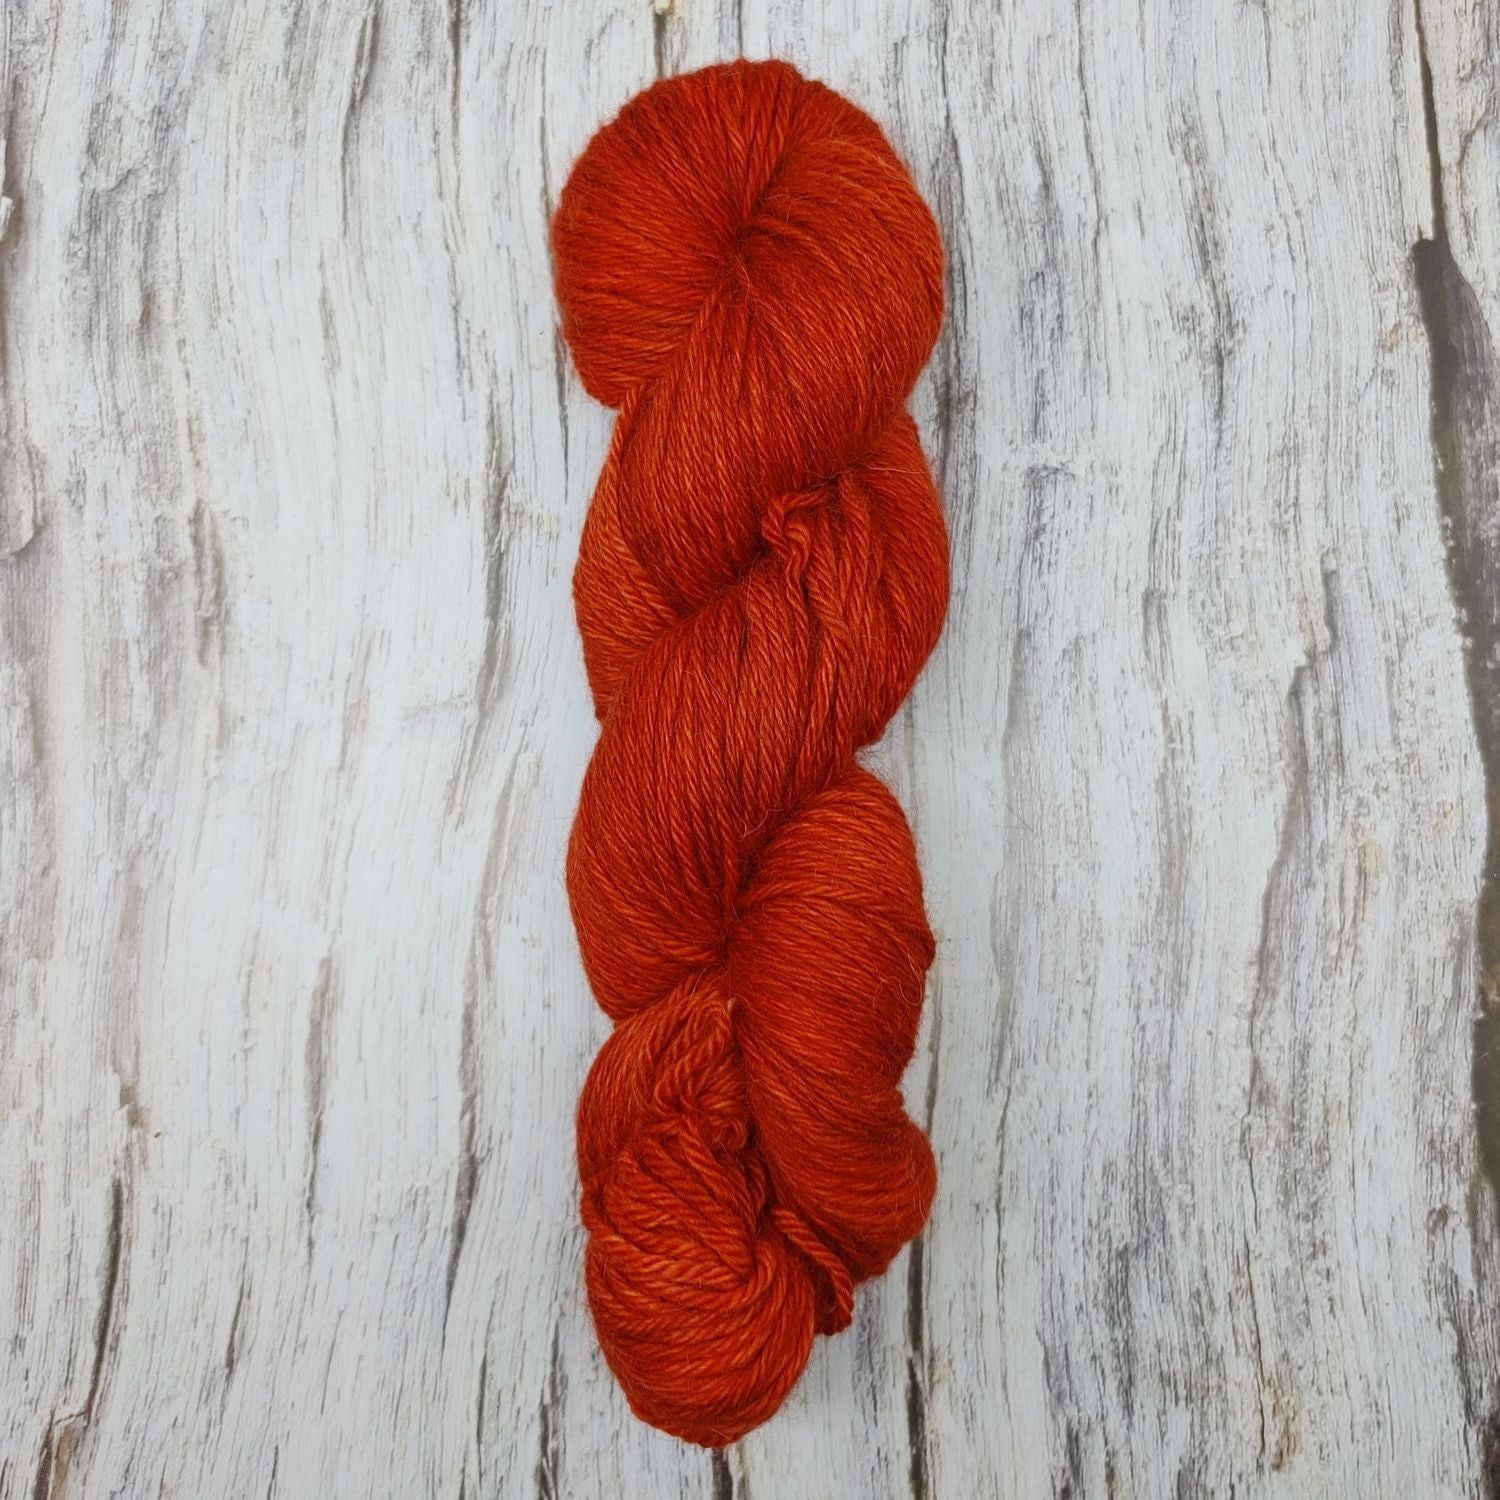 Aymara Mudita Alpaca Double Knit Yarn